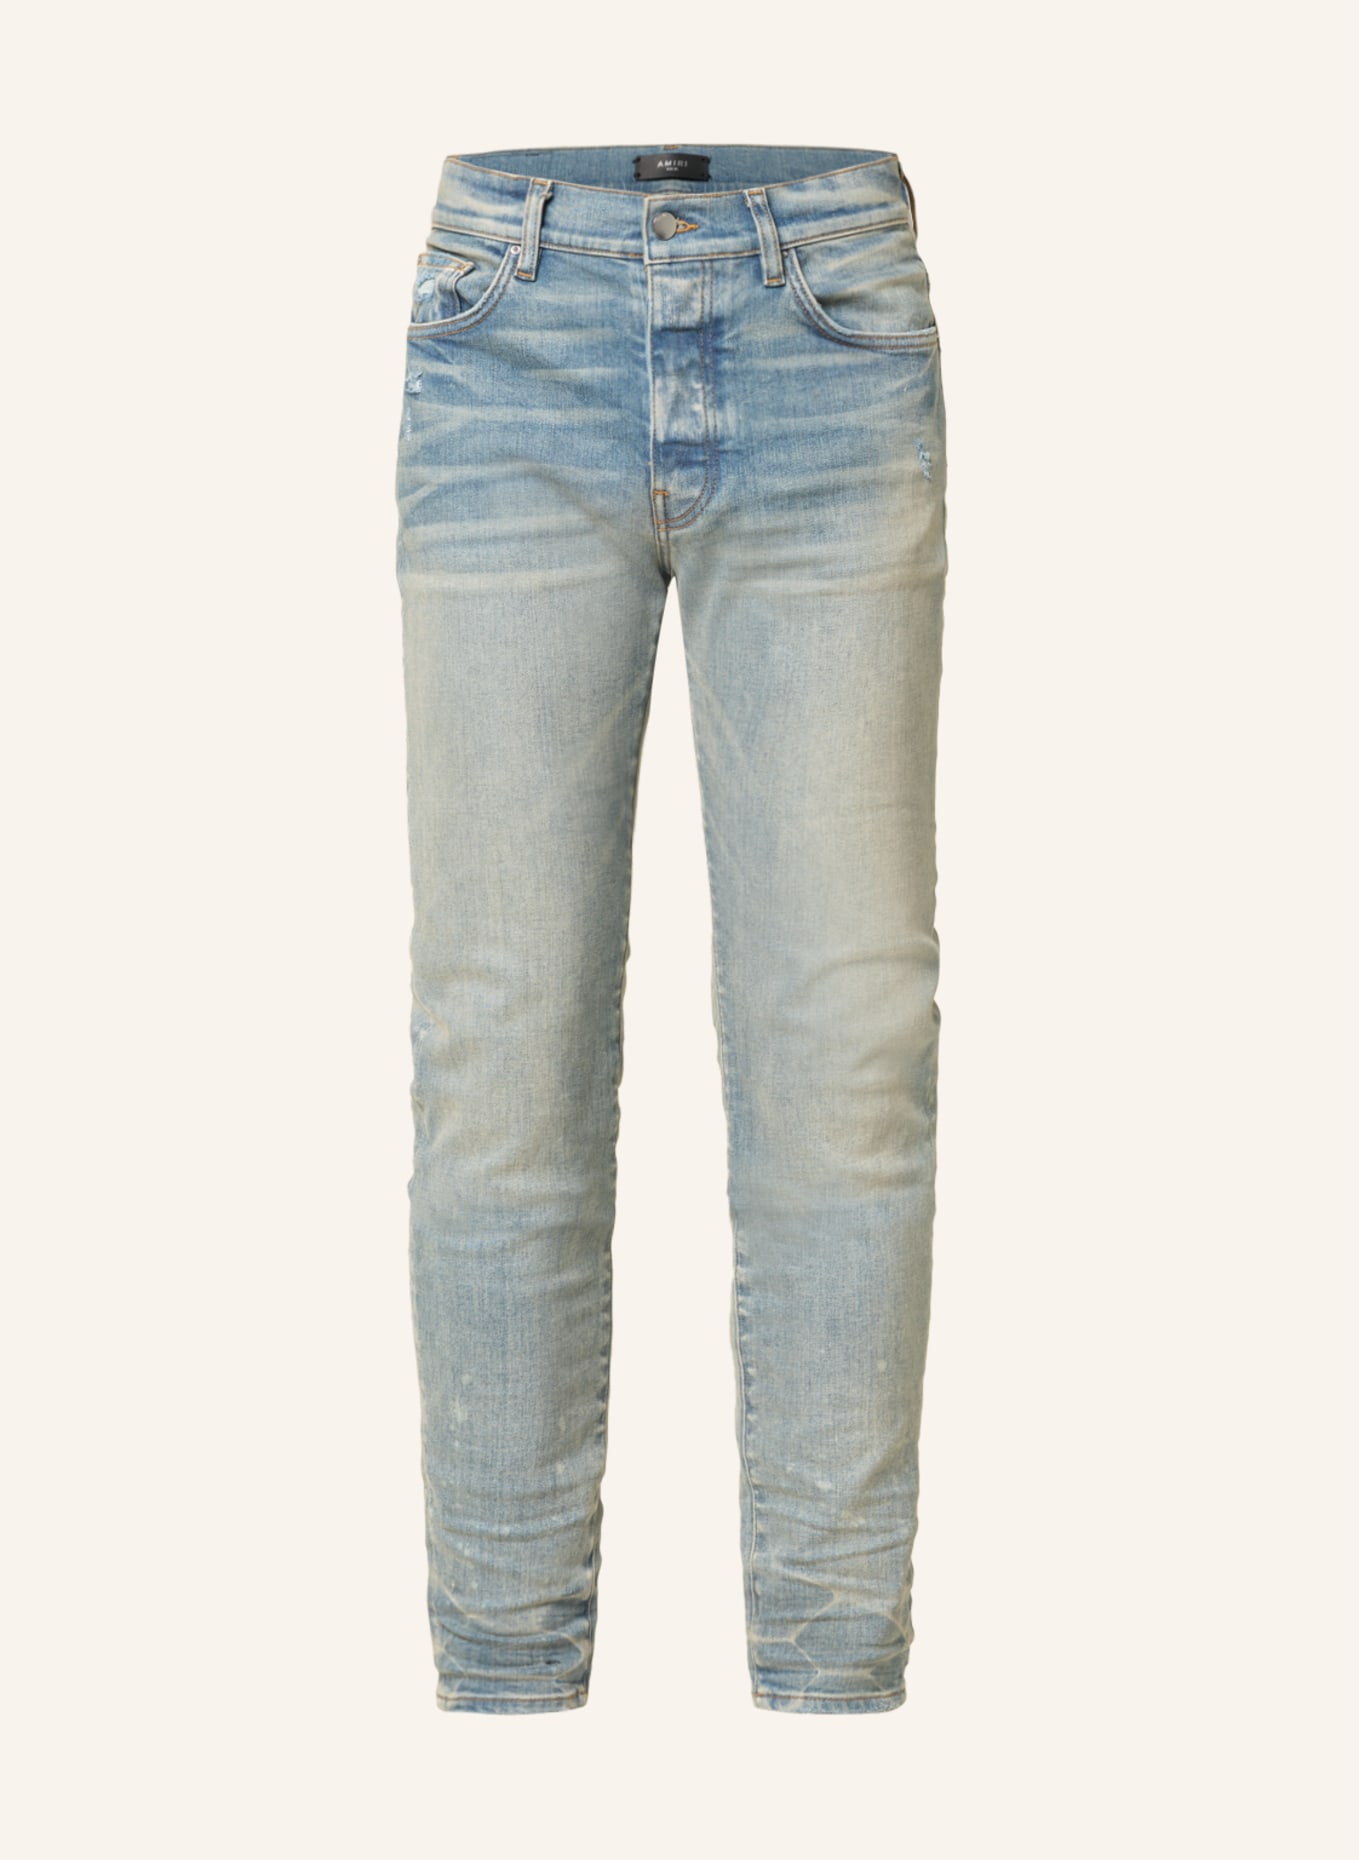 AMIRI Jeans Skinny Fit, Farbe: 408 CLAY INDIGO (Bild 1)